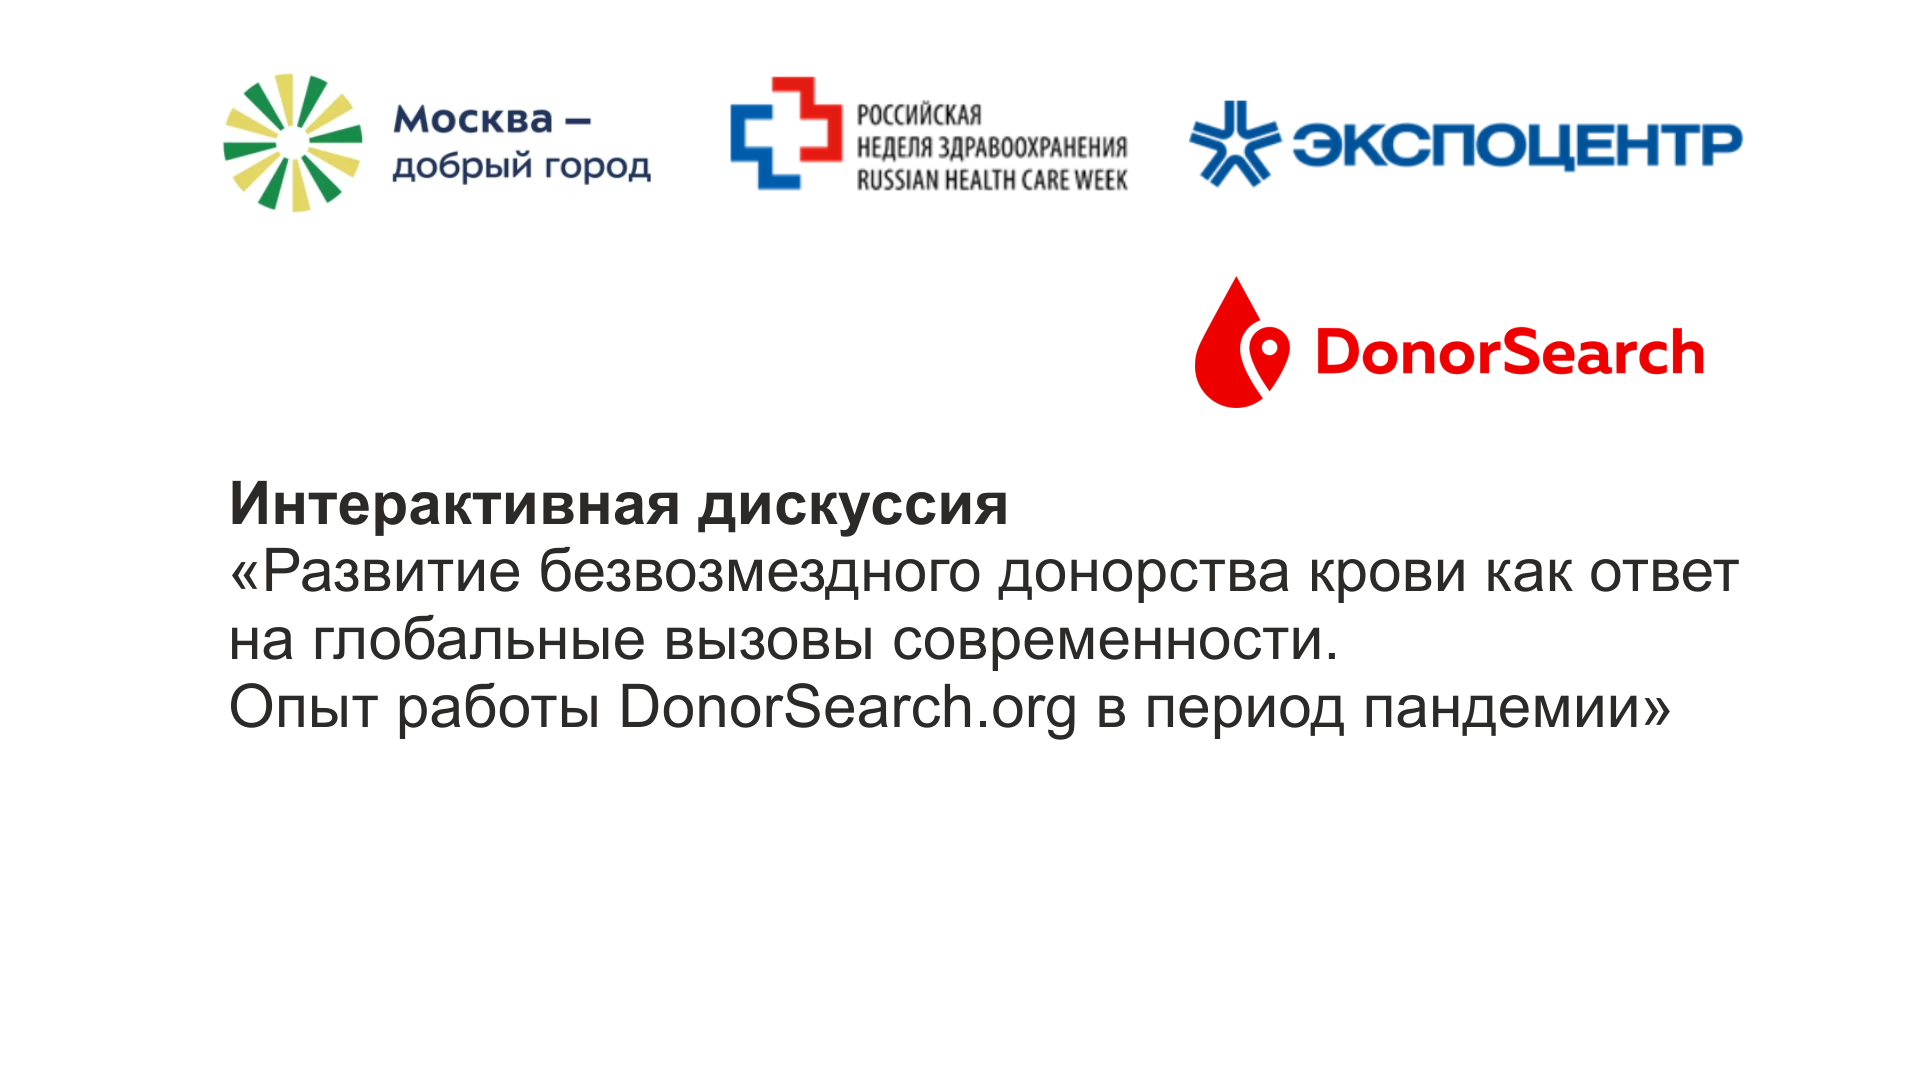 В Москве состоялась презентация проекта Moscow DonorSearch.org, Журнал DonorSearch